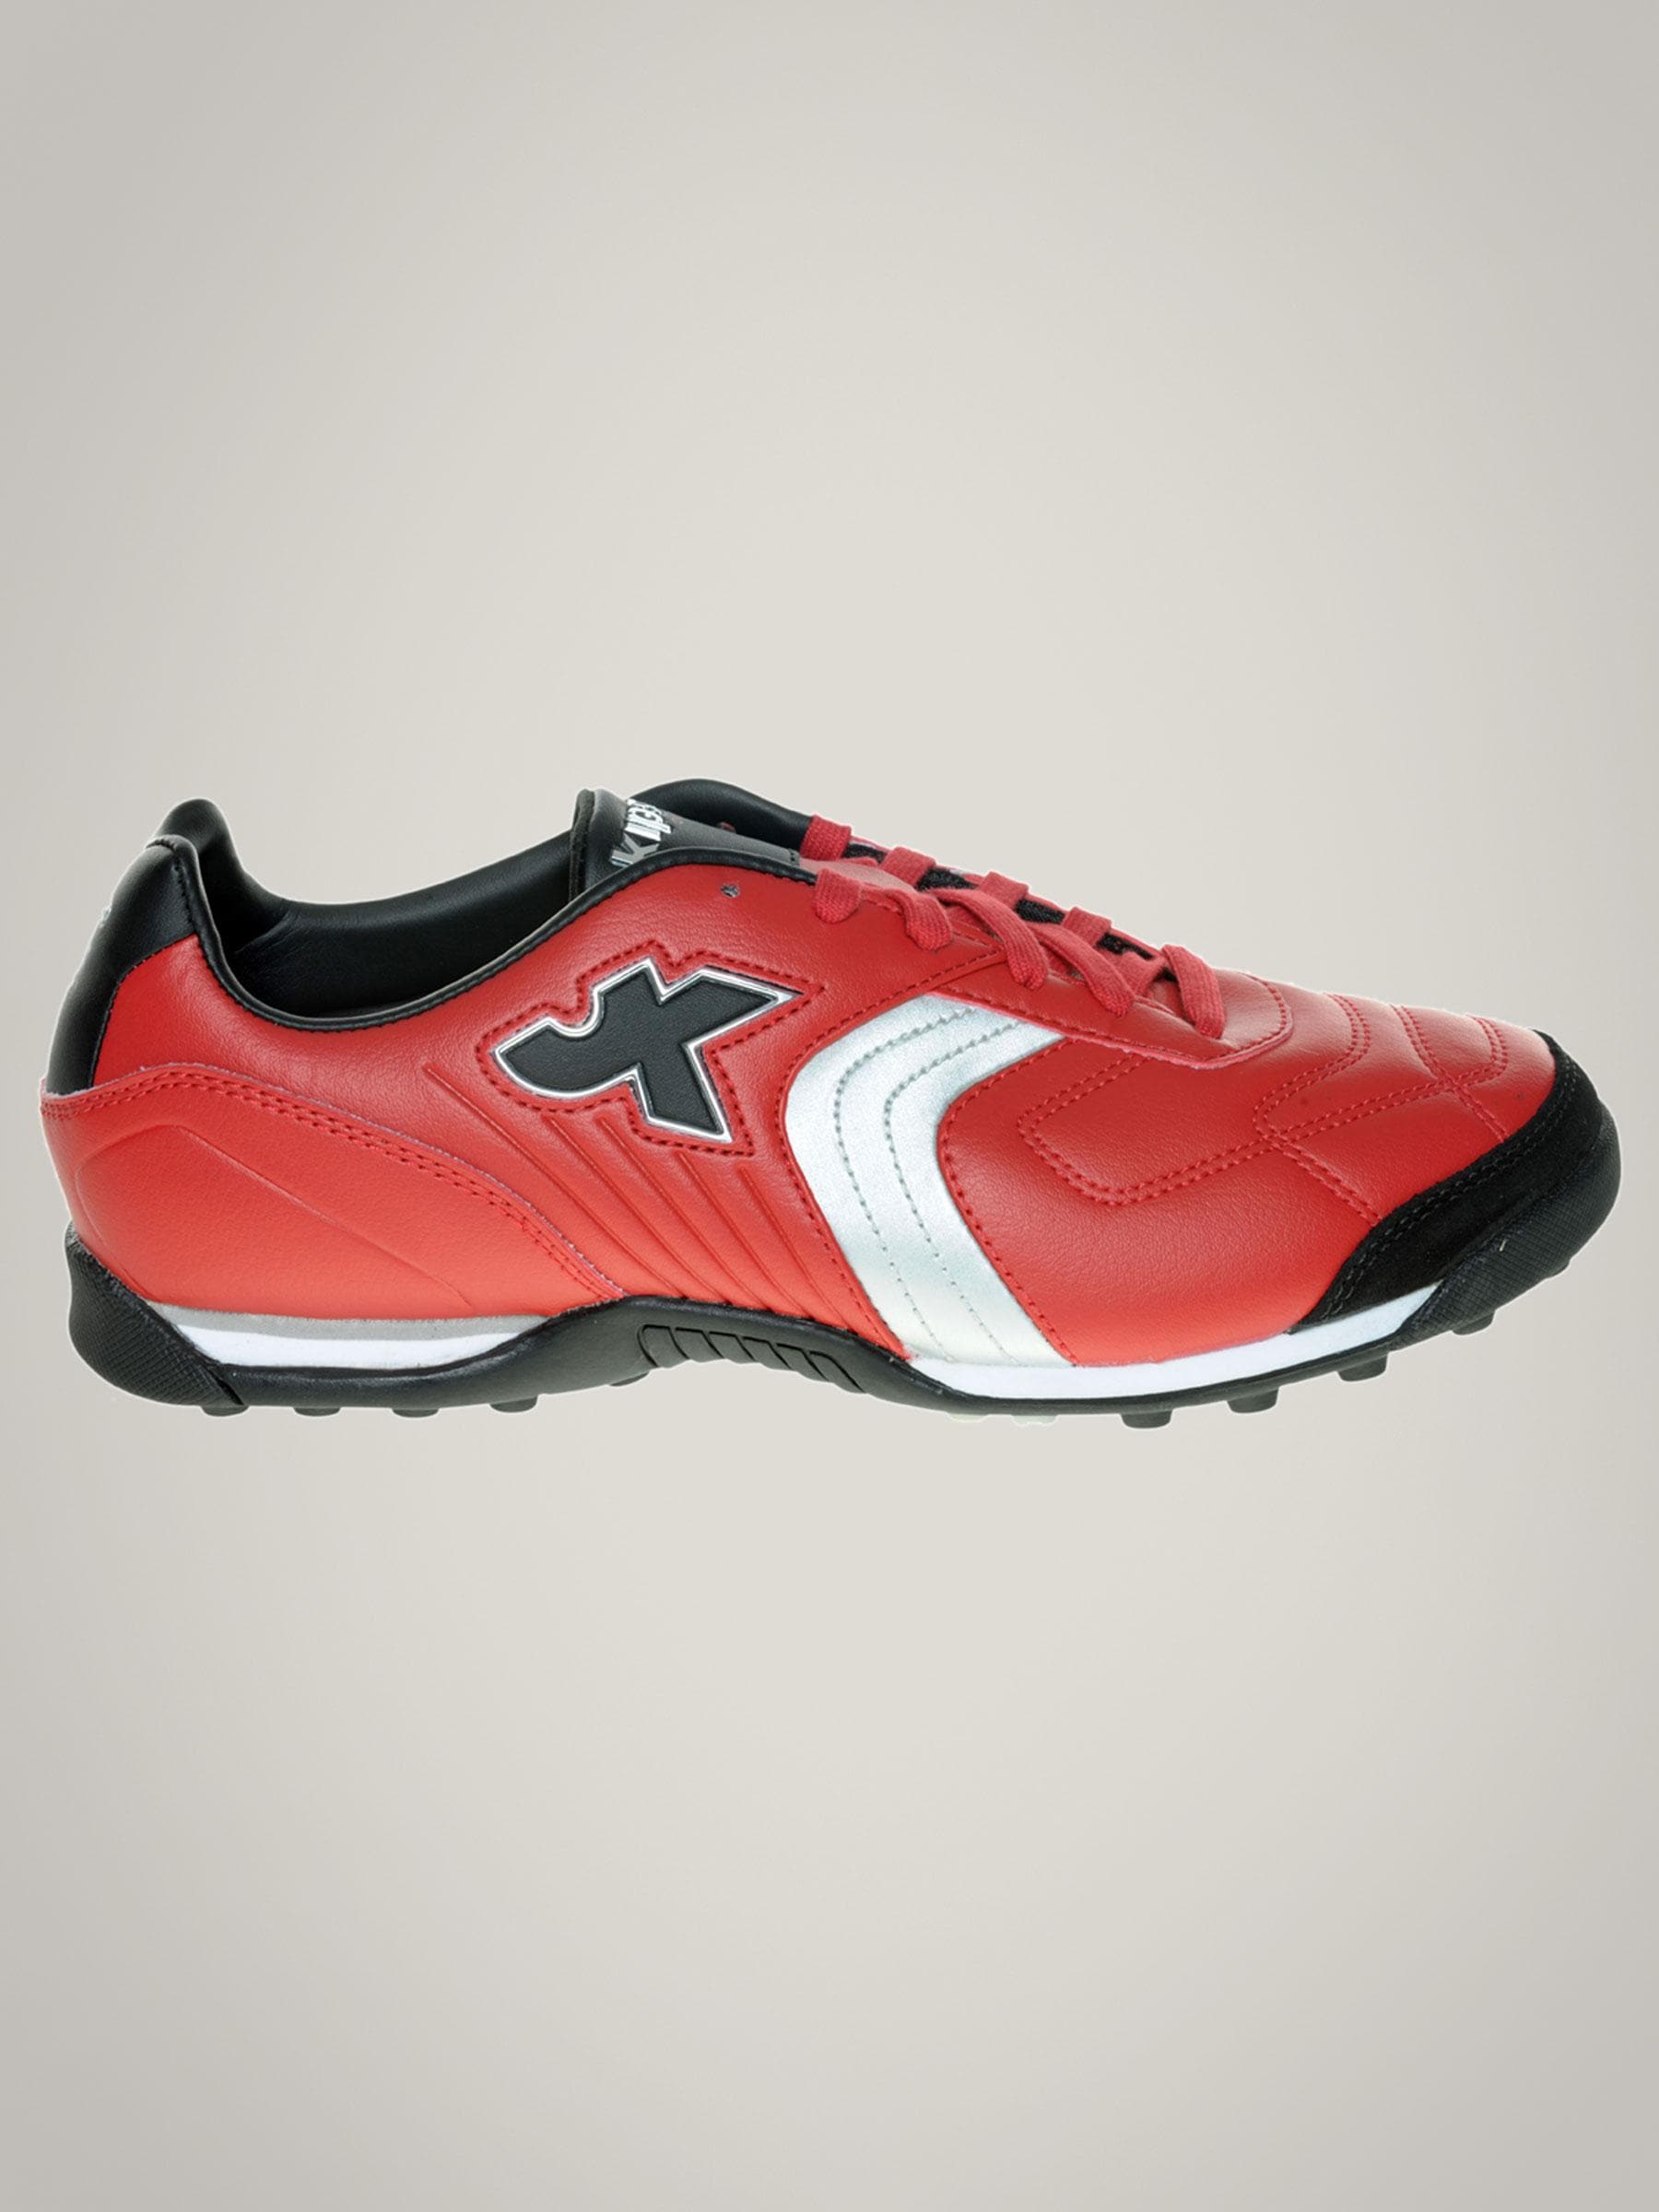 Kipsta Men's Superfit Football Red Shoe